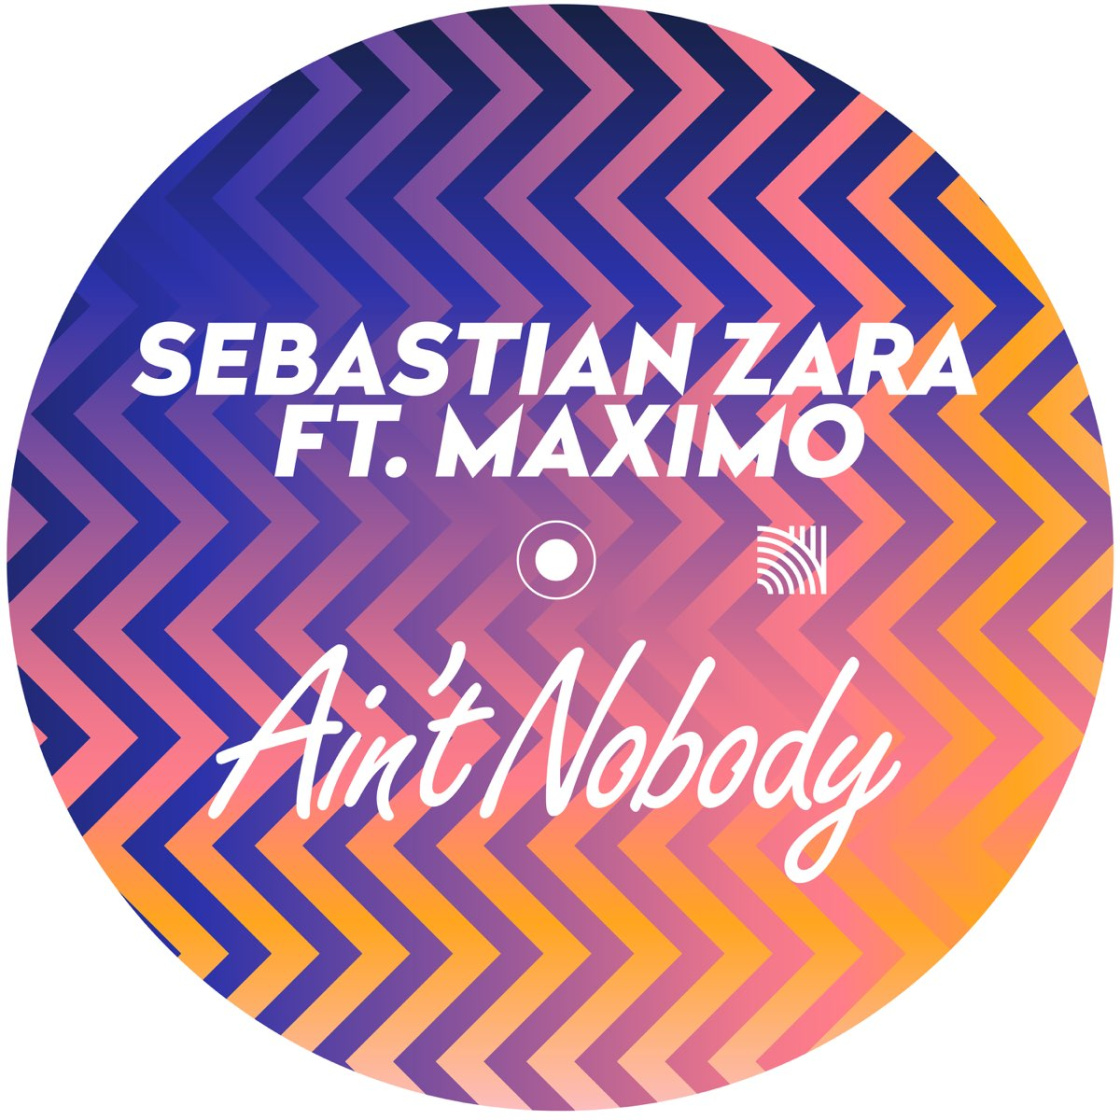 Ain't Nobody (by Chaka Khan)